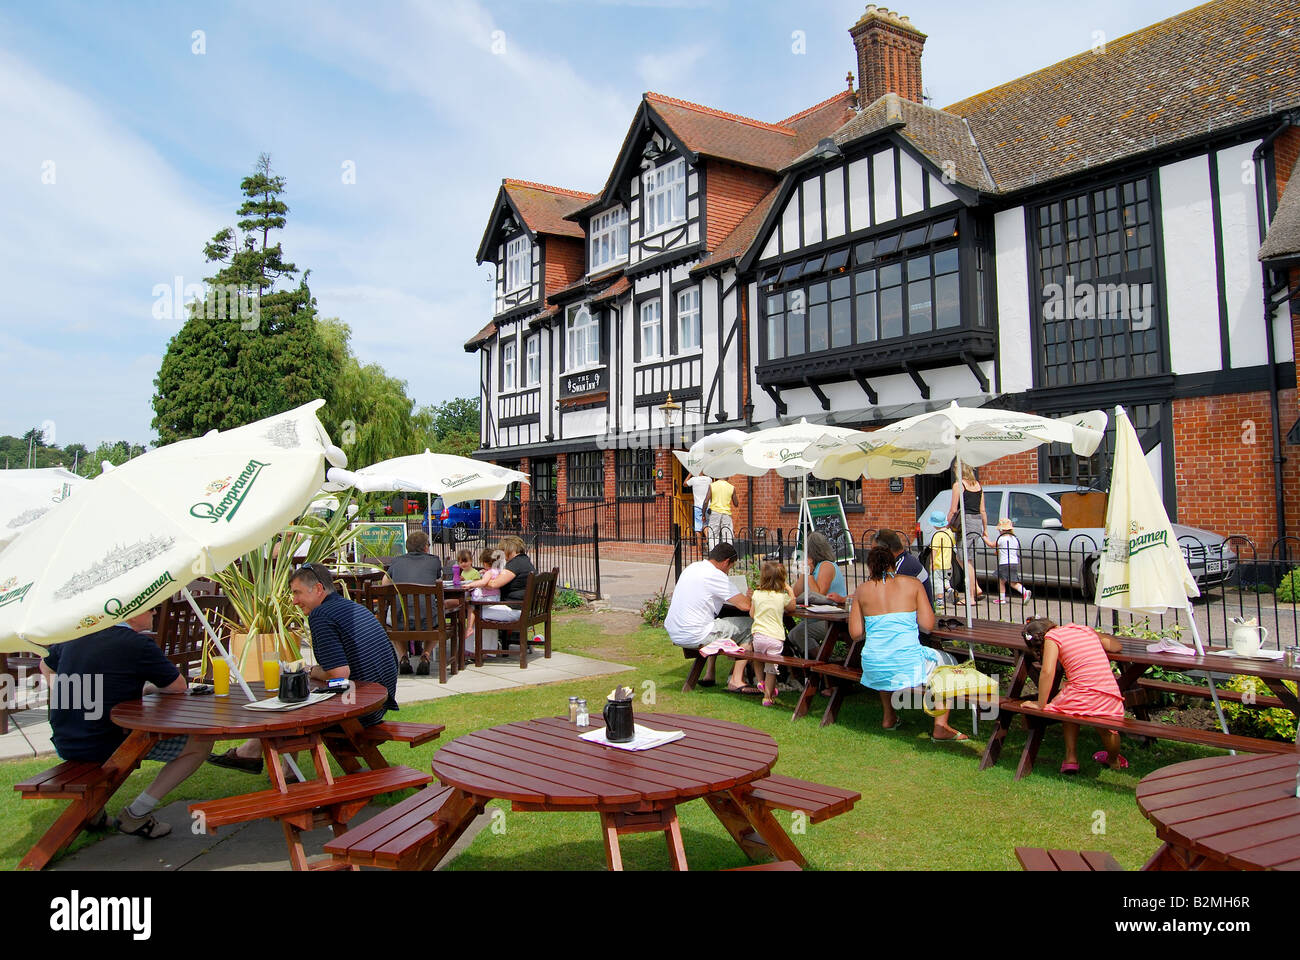 The Swan Inn by River Bure, Horning, Norfolk Broads, Norfolk, England, United Kingdom Stock Photo